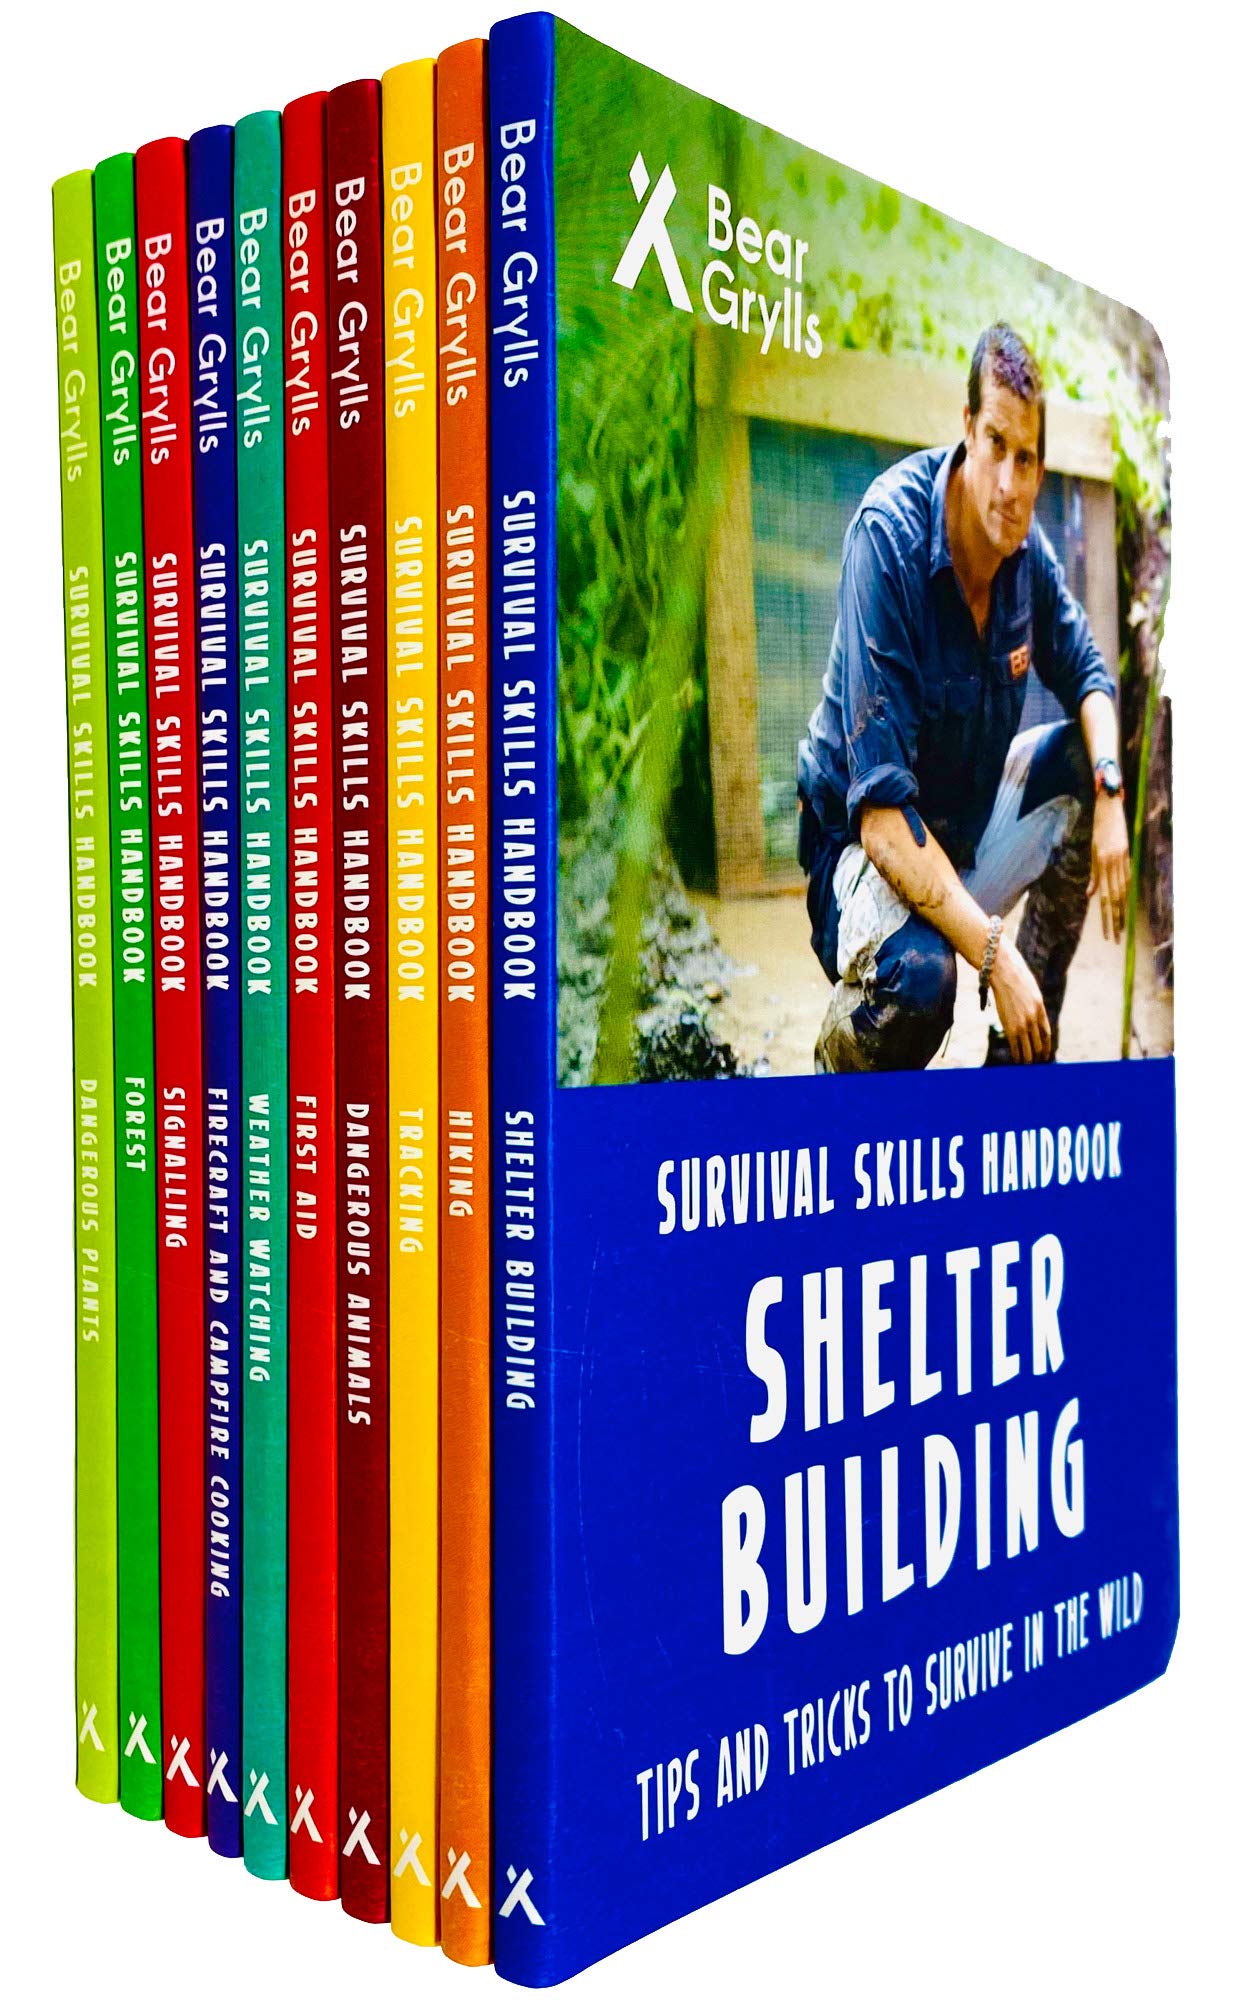 Bear Grylls Survival Skills Handbook Series 10 Books Collection Set Paperback - Lets Buy Books